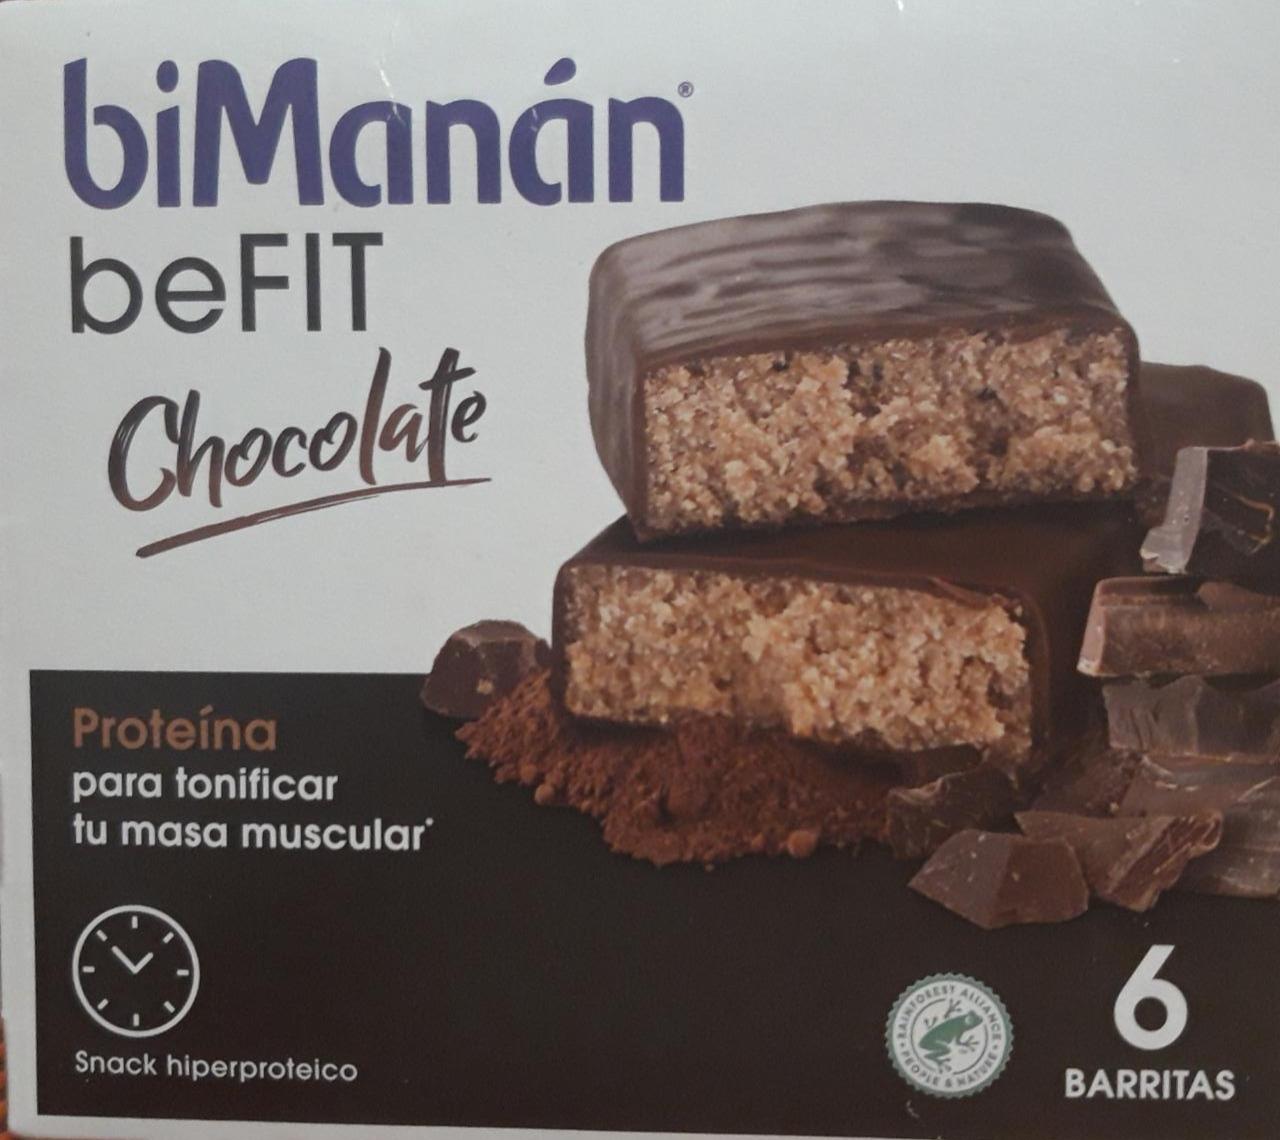 Fotografie - beFit Chocolate biManán